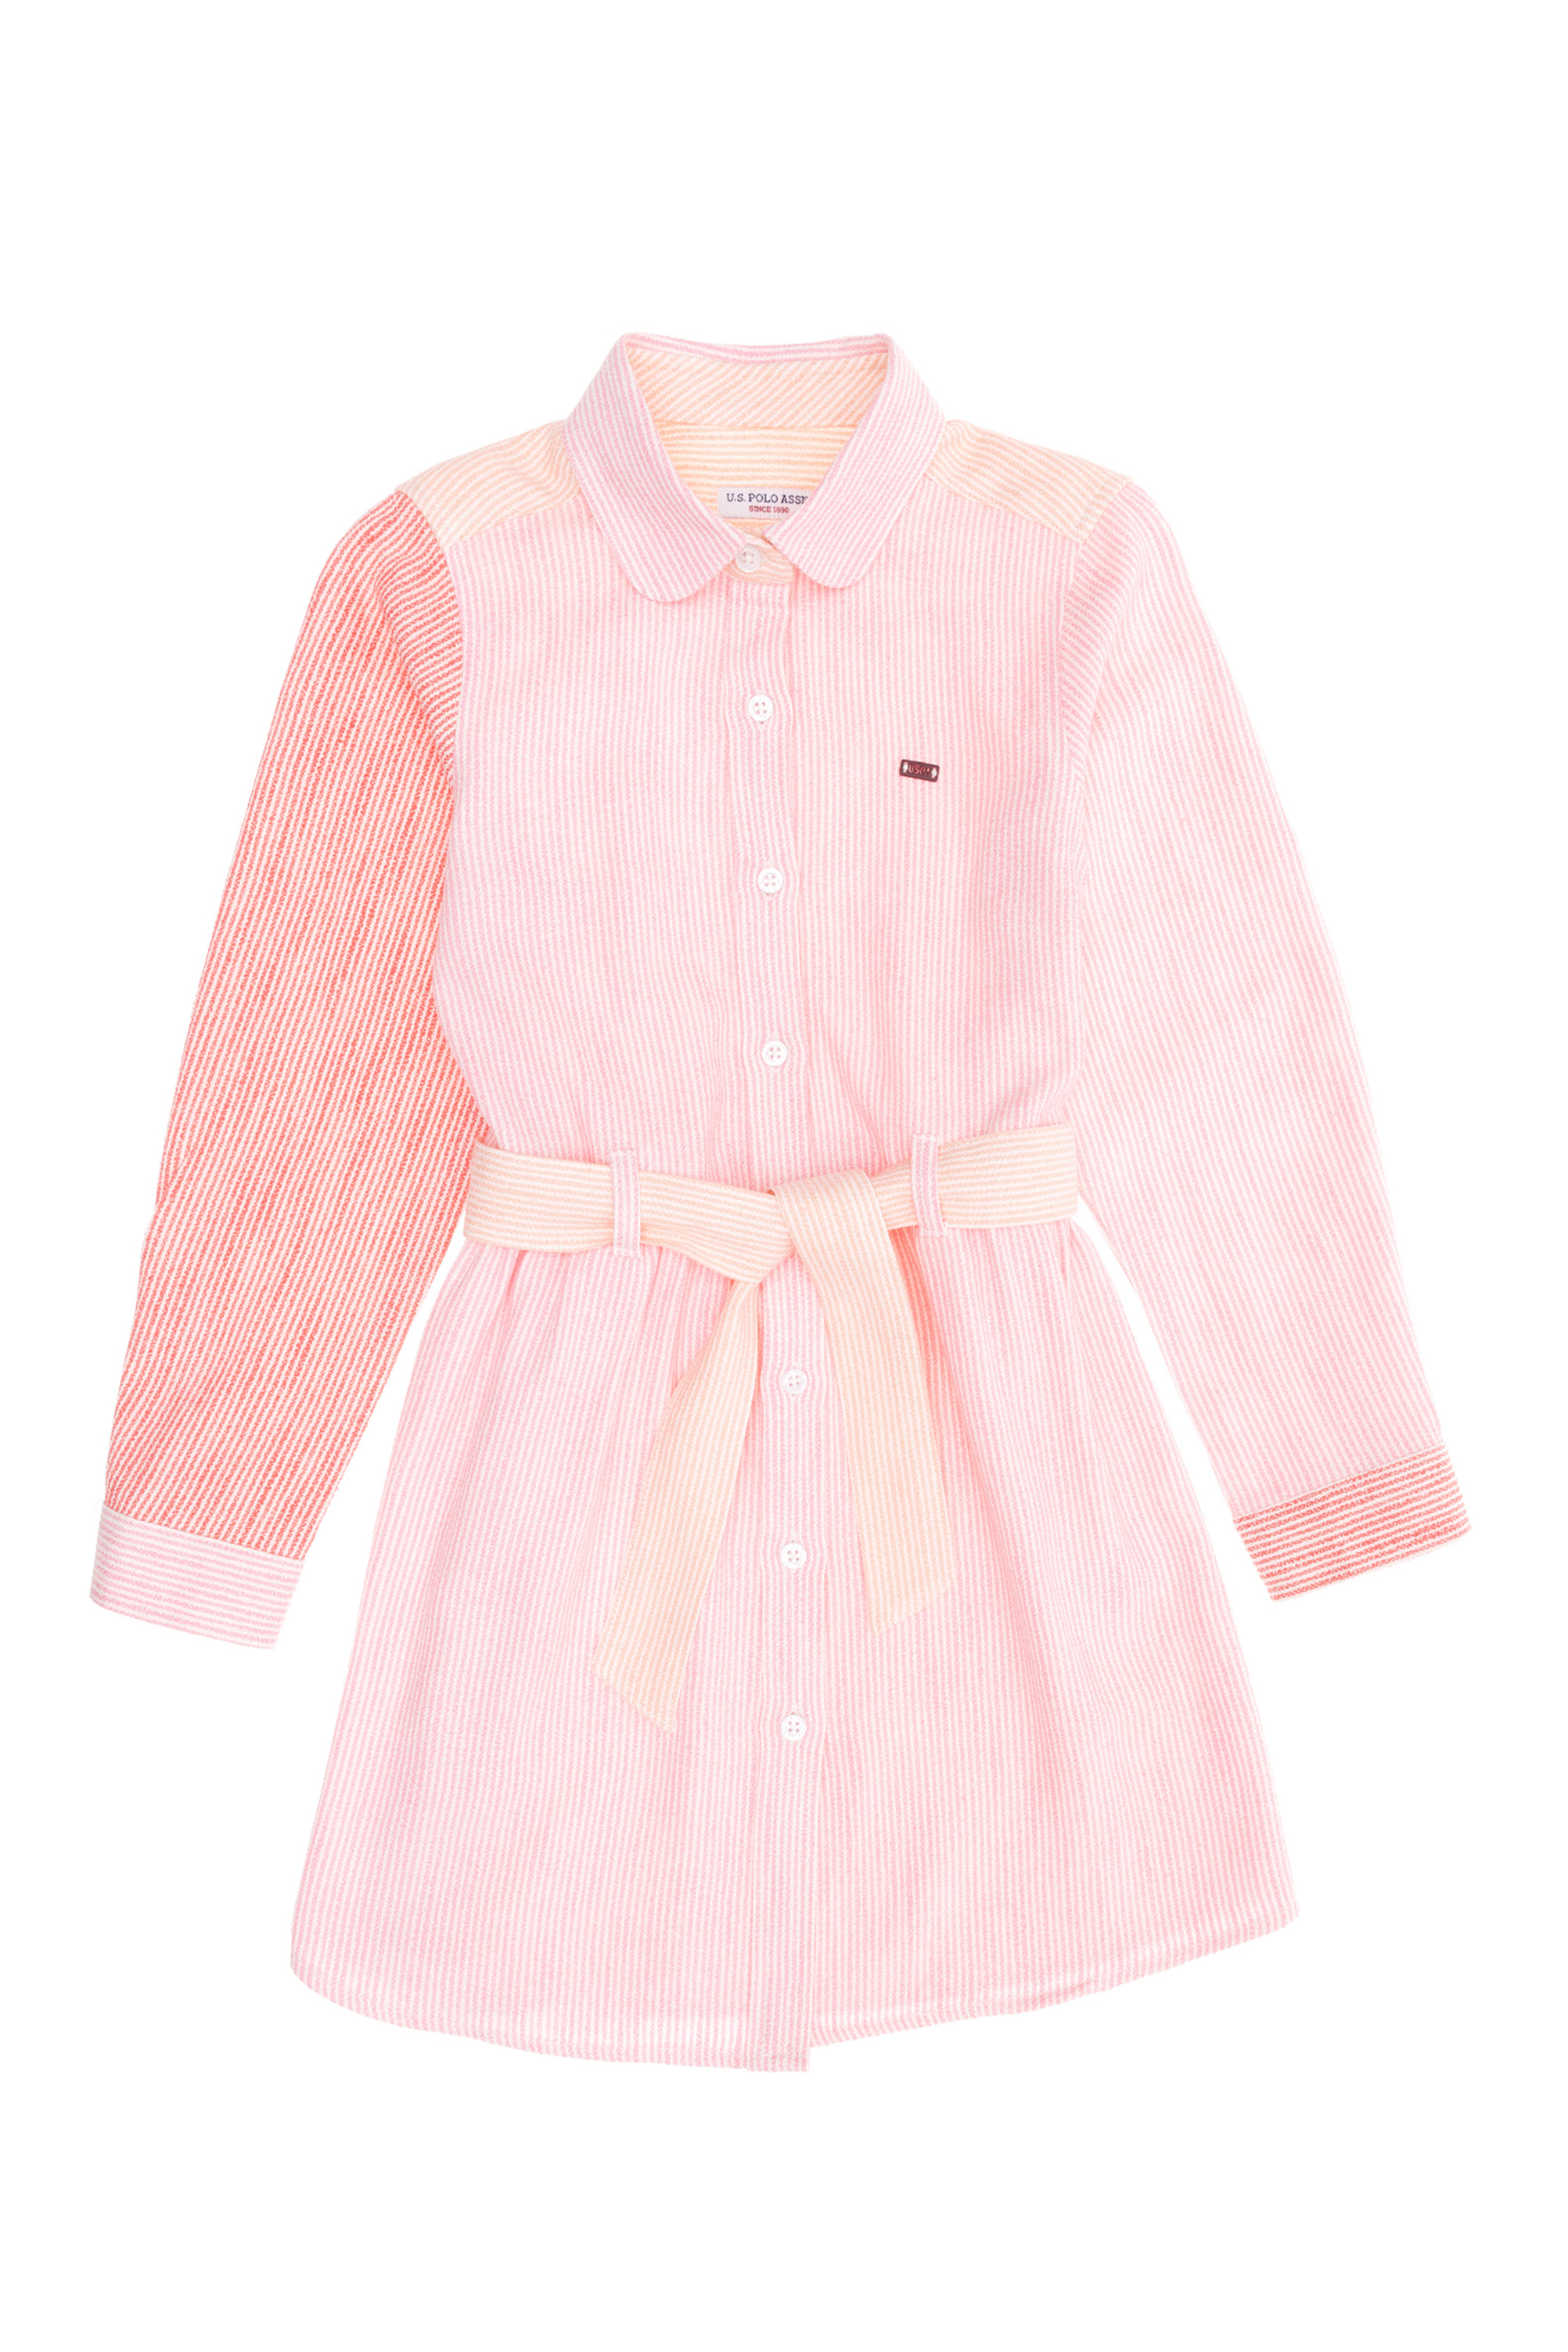 Платье U.S. Polo Assn. розовое, красное, 134,140, G084SZ032-000-1568511-SAMIRA_VR078_9_10